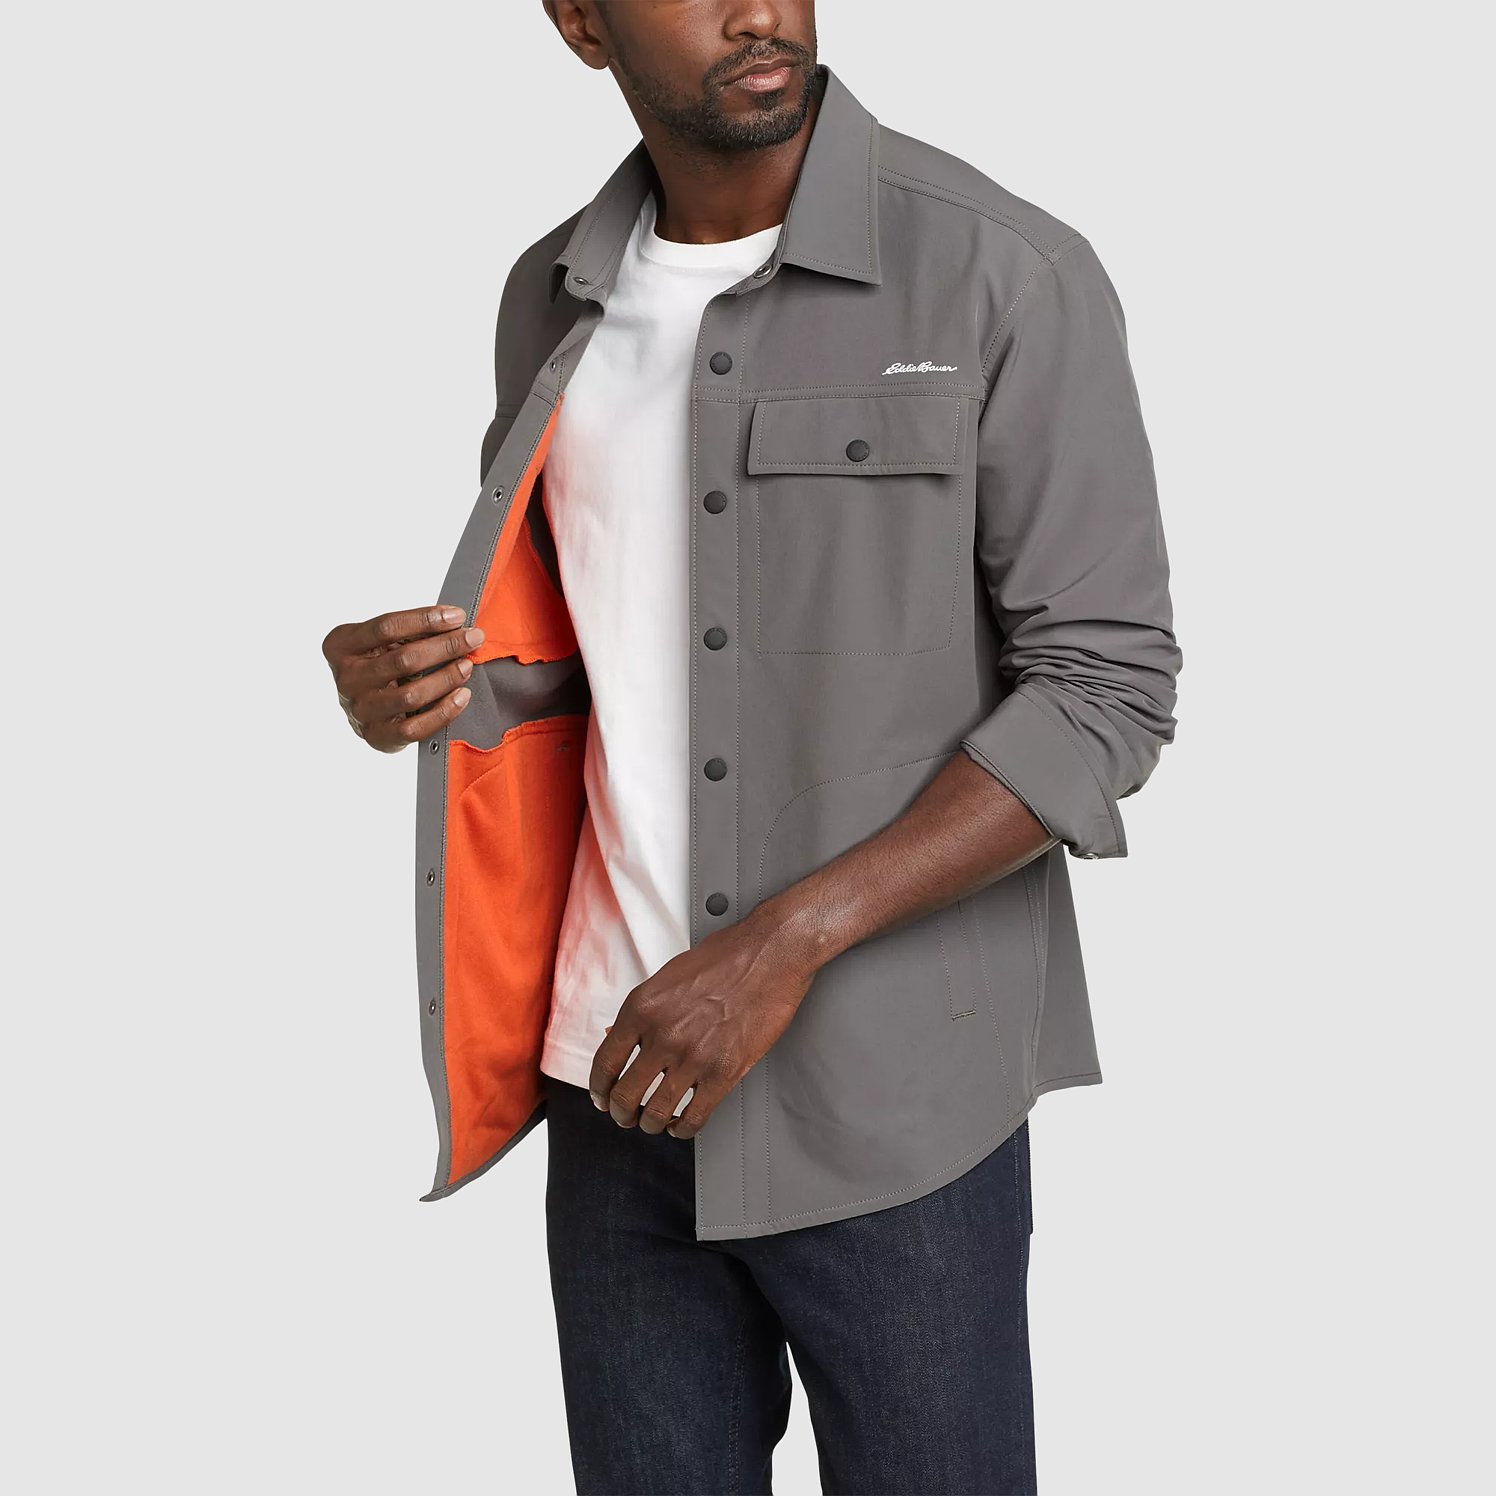 Eddie Bauer Men's Long-Sleeve Swift Myth Thermal Shirt Jacket - Grey - Large